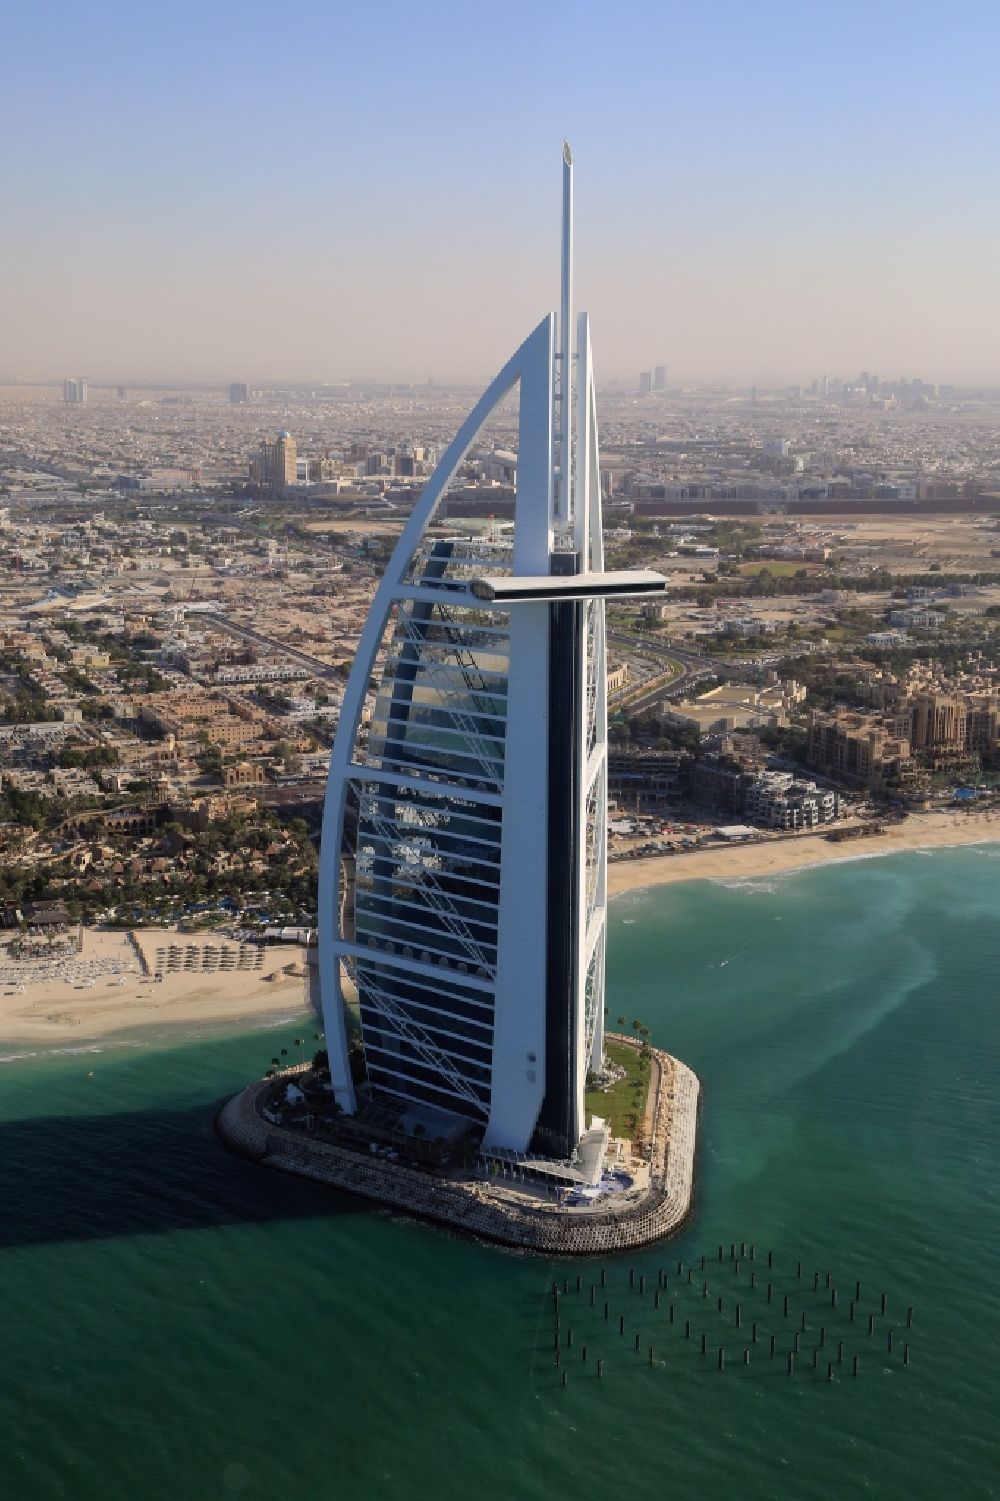 Aerial photograph Dubai - Burj Al Arab is landmark and symbol of Dubai in United Arab Emirates